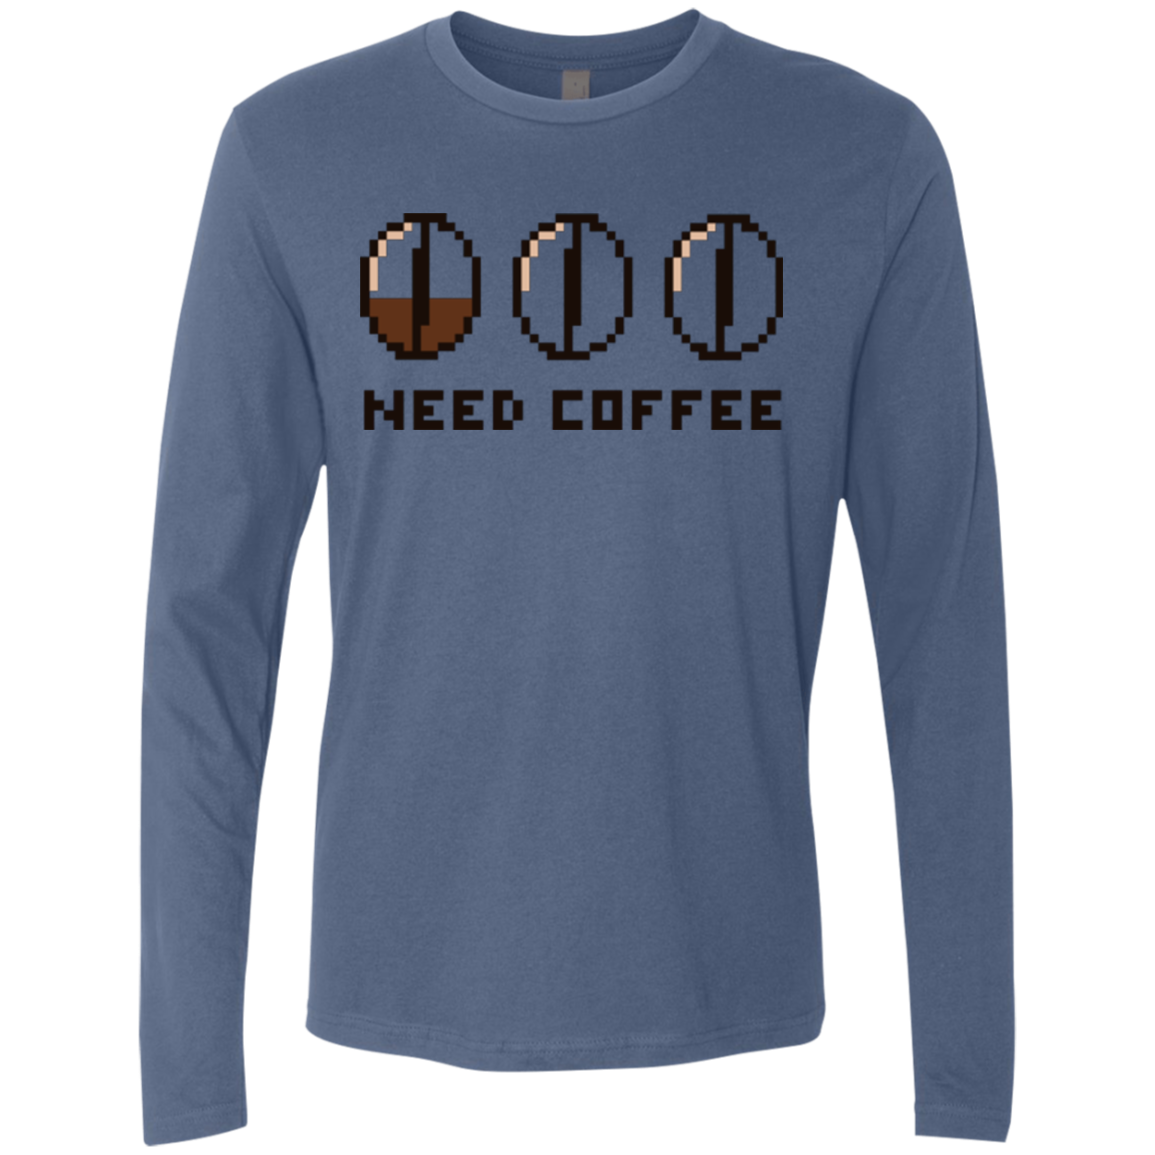 Need Coffee Men's Premium Long Sleeve